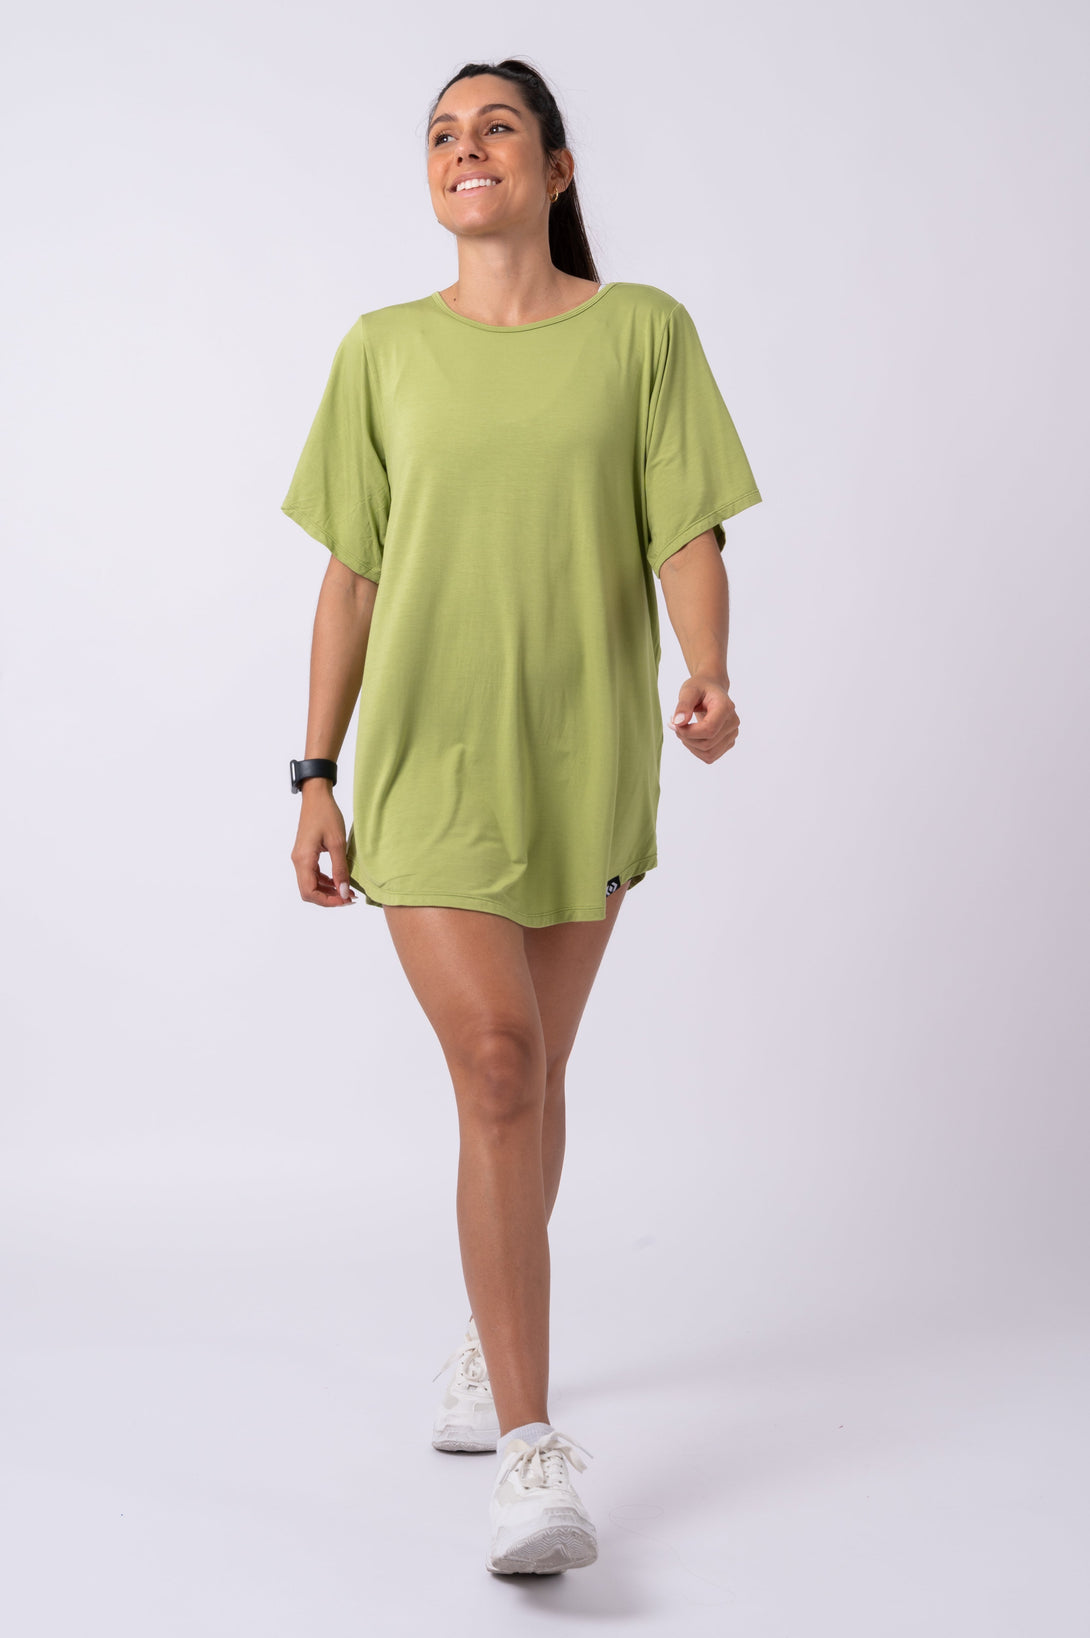 Avocado Green Slinky To Touch - Plain Boyfriend Tee-Activewear-Exoticathletica